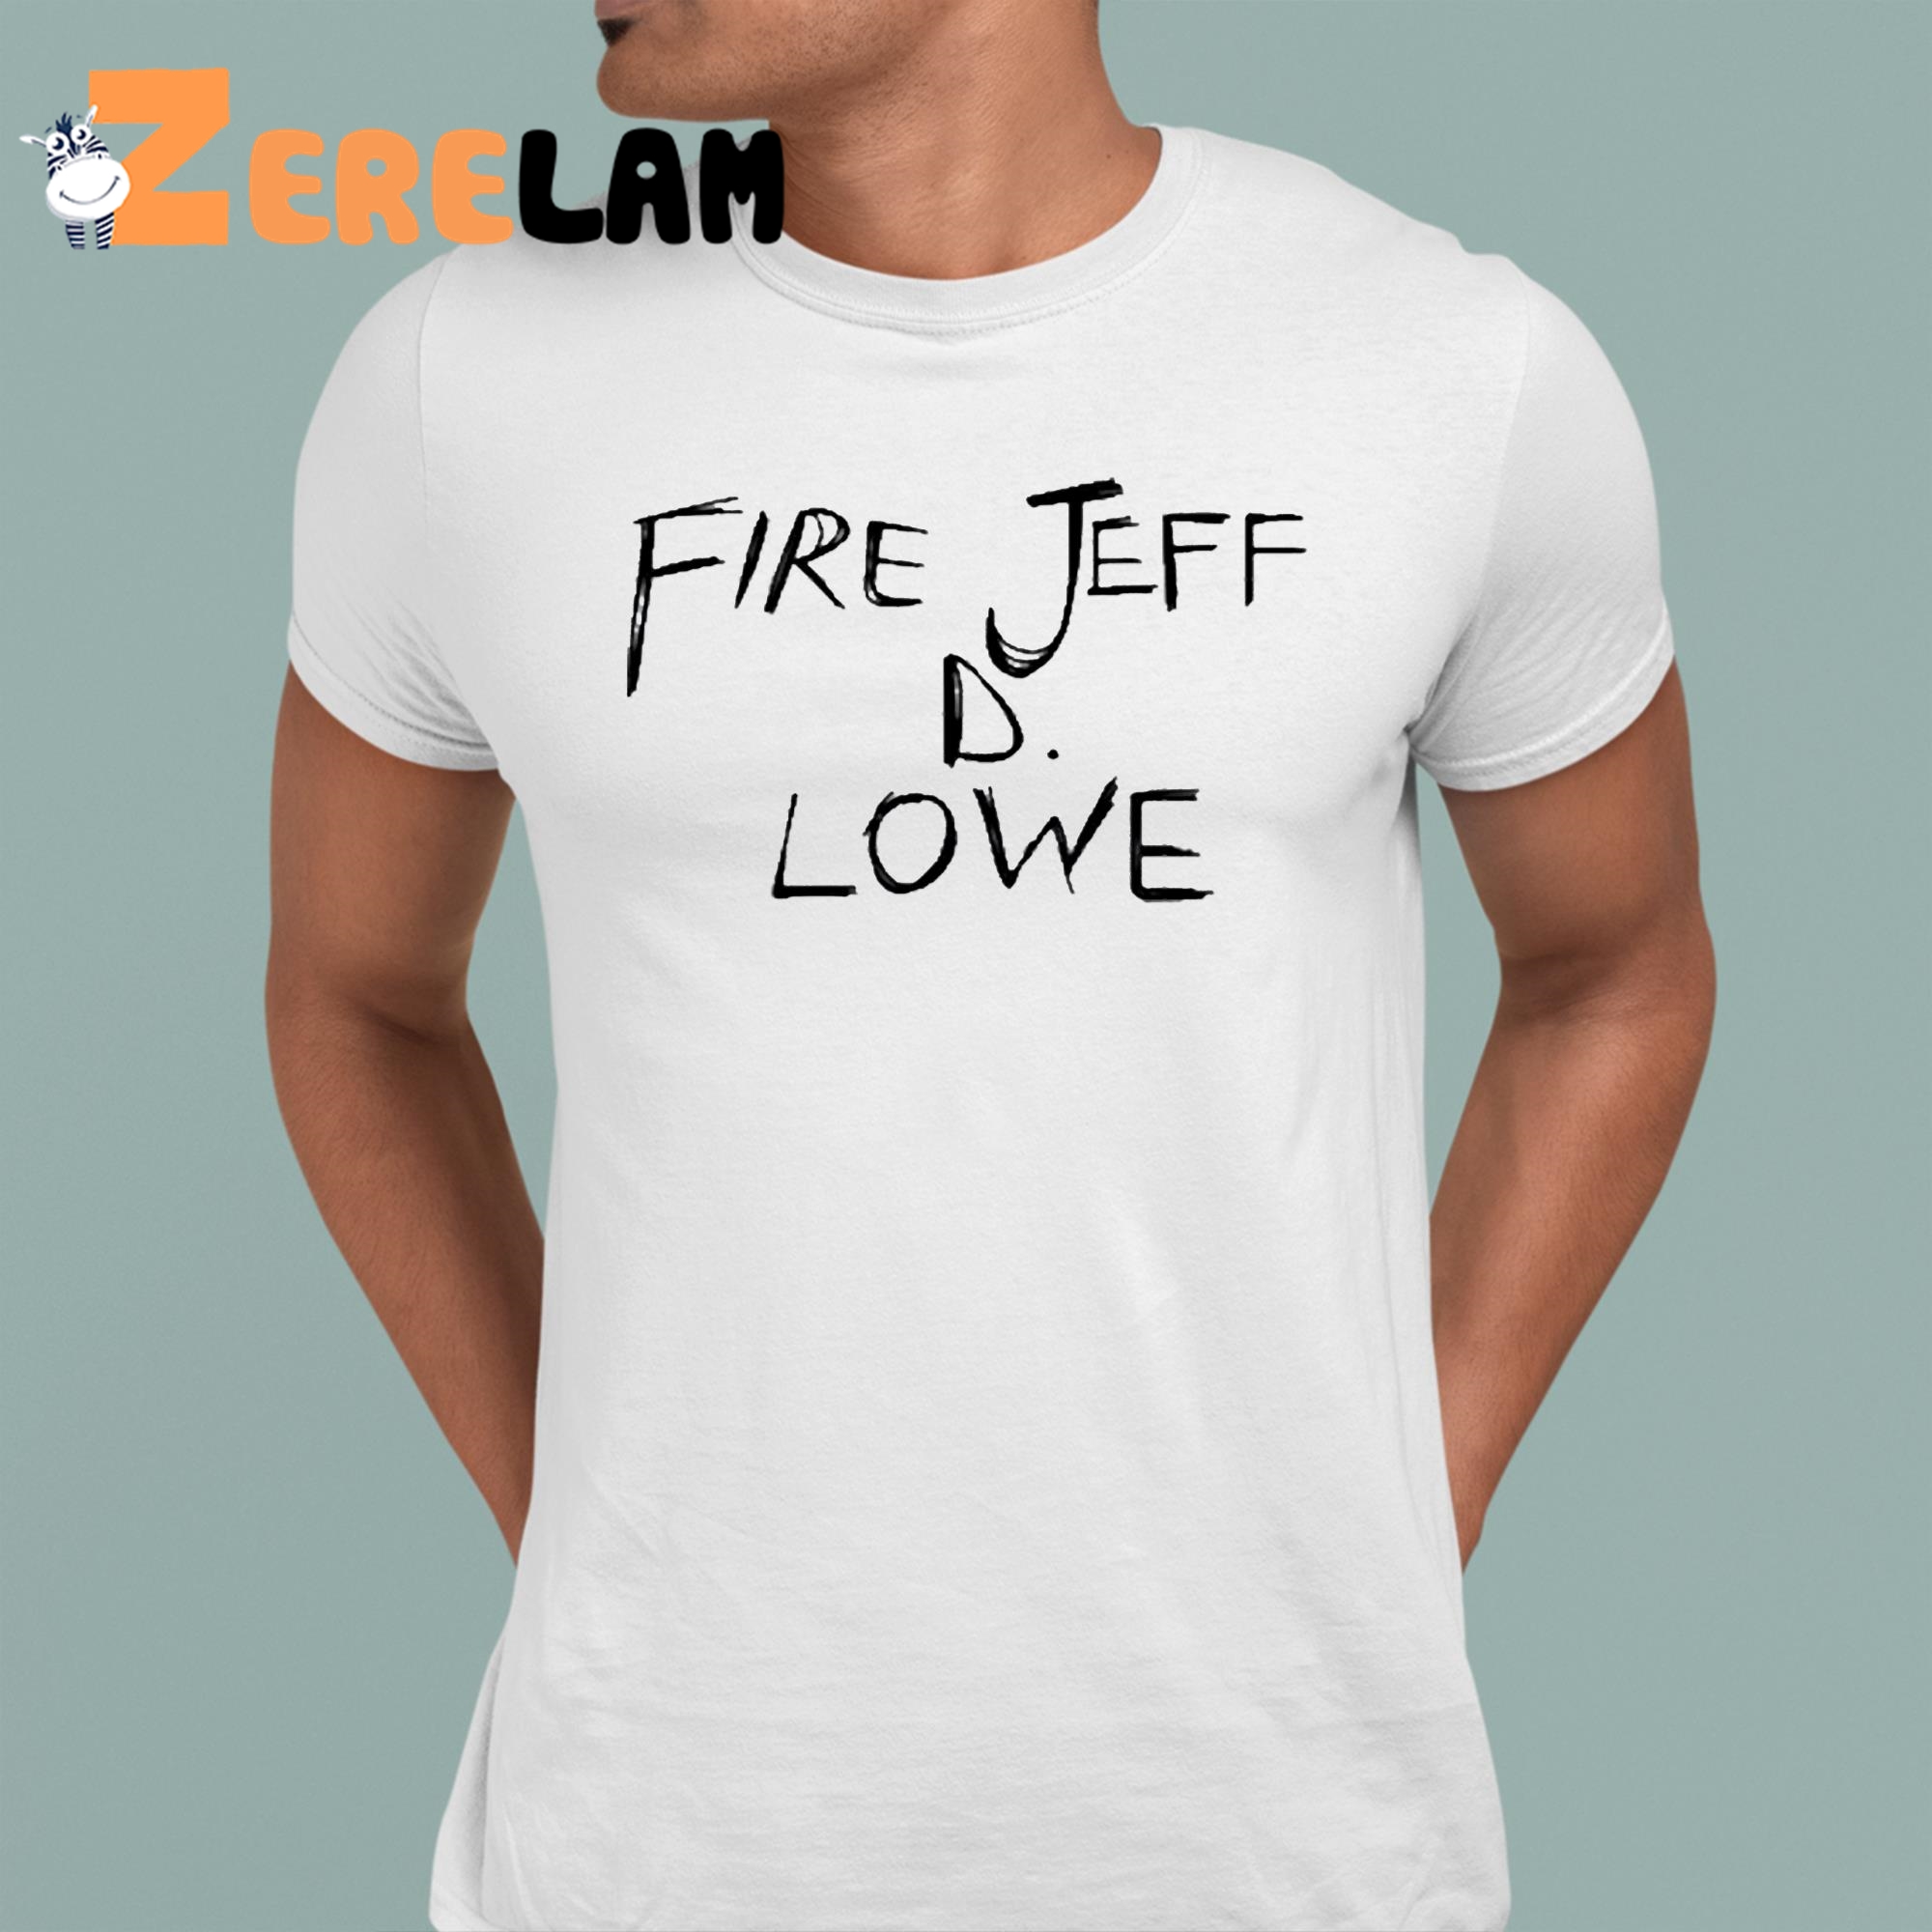 Fire Jeff D Lowe Shirt 1 1